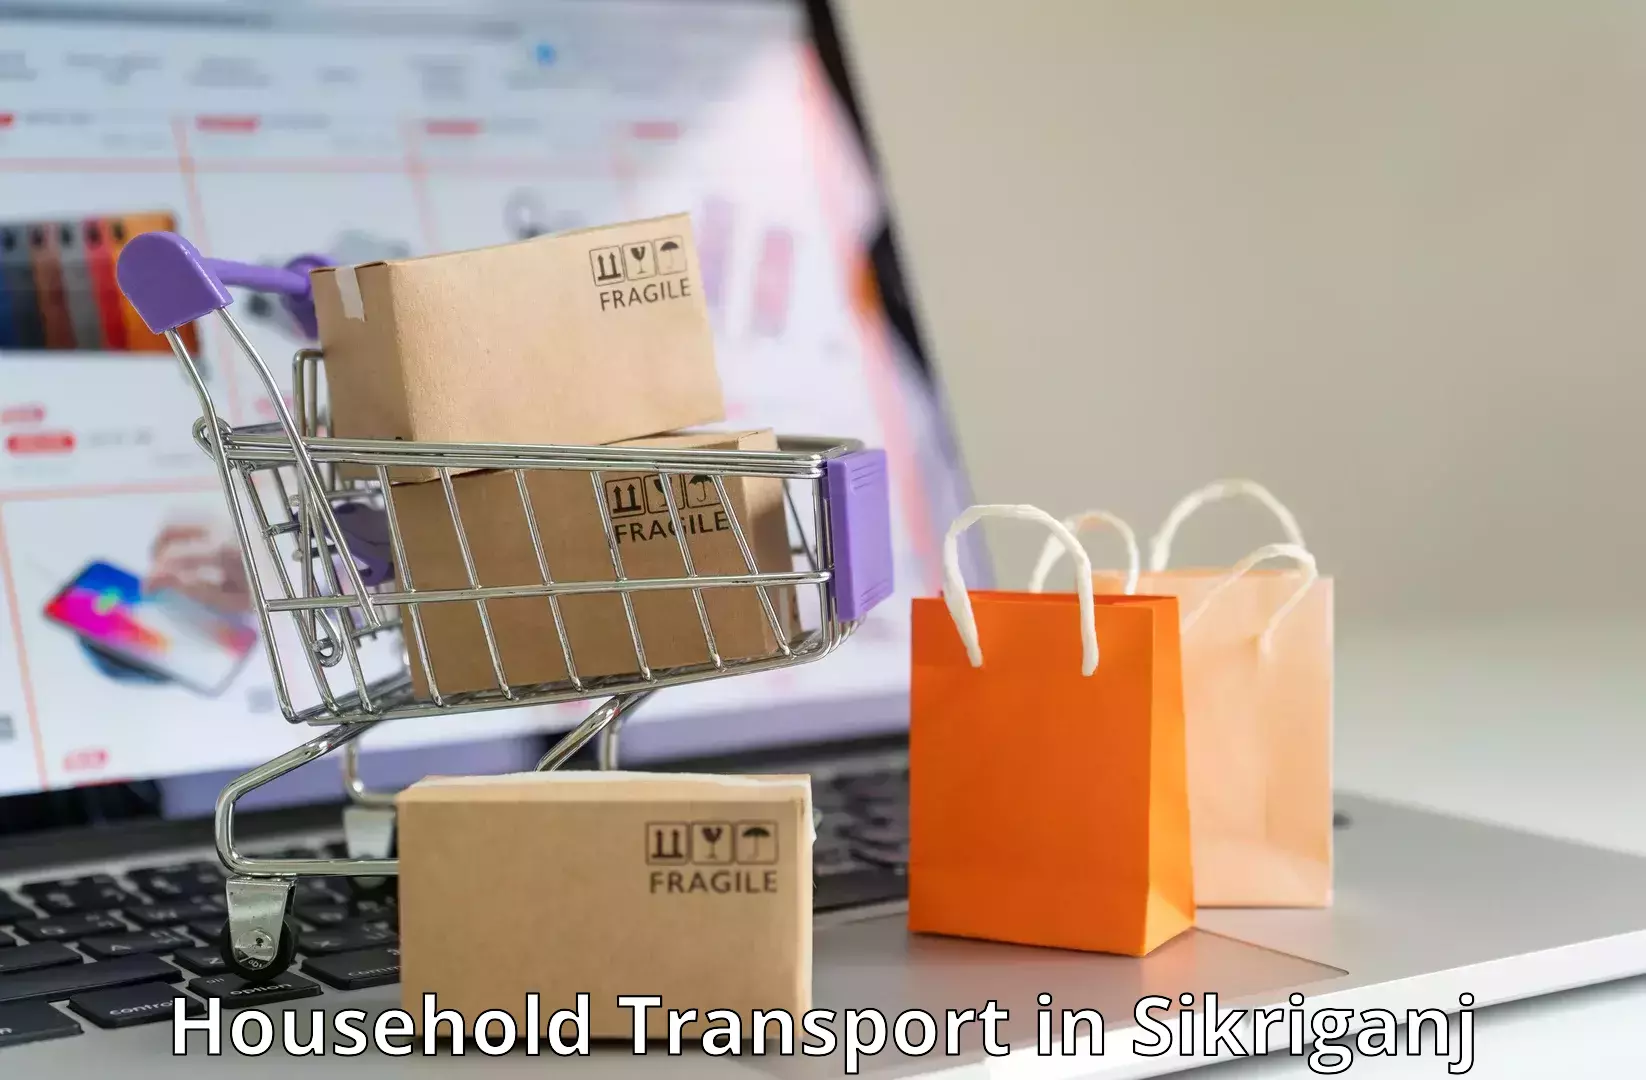 Long-distance household transport in Sikriganj